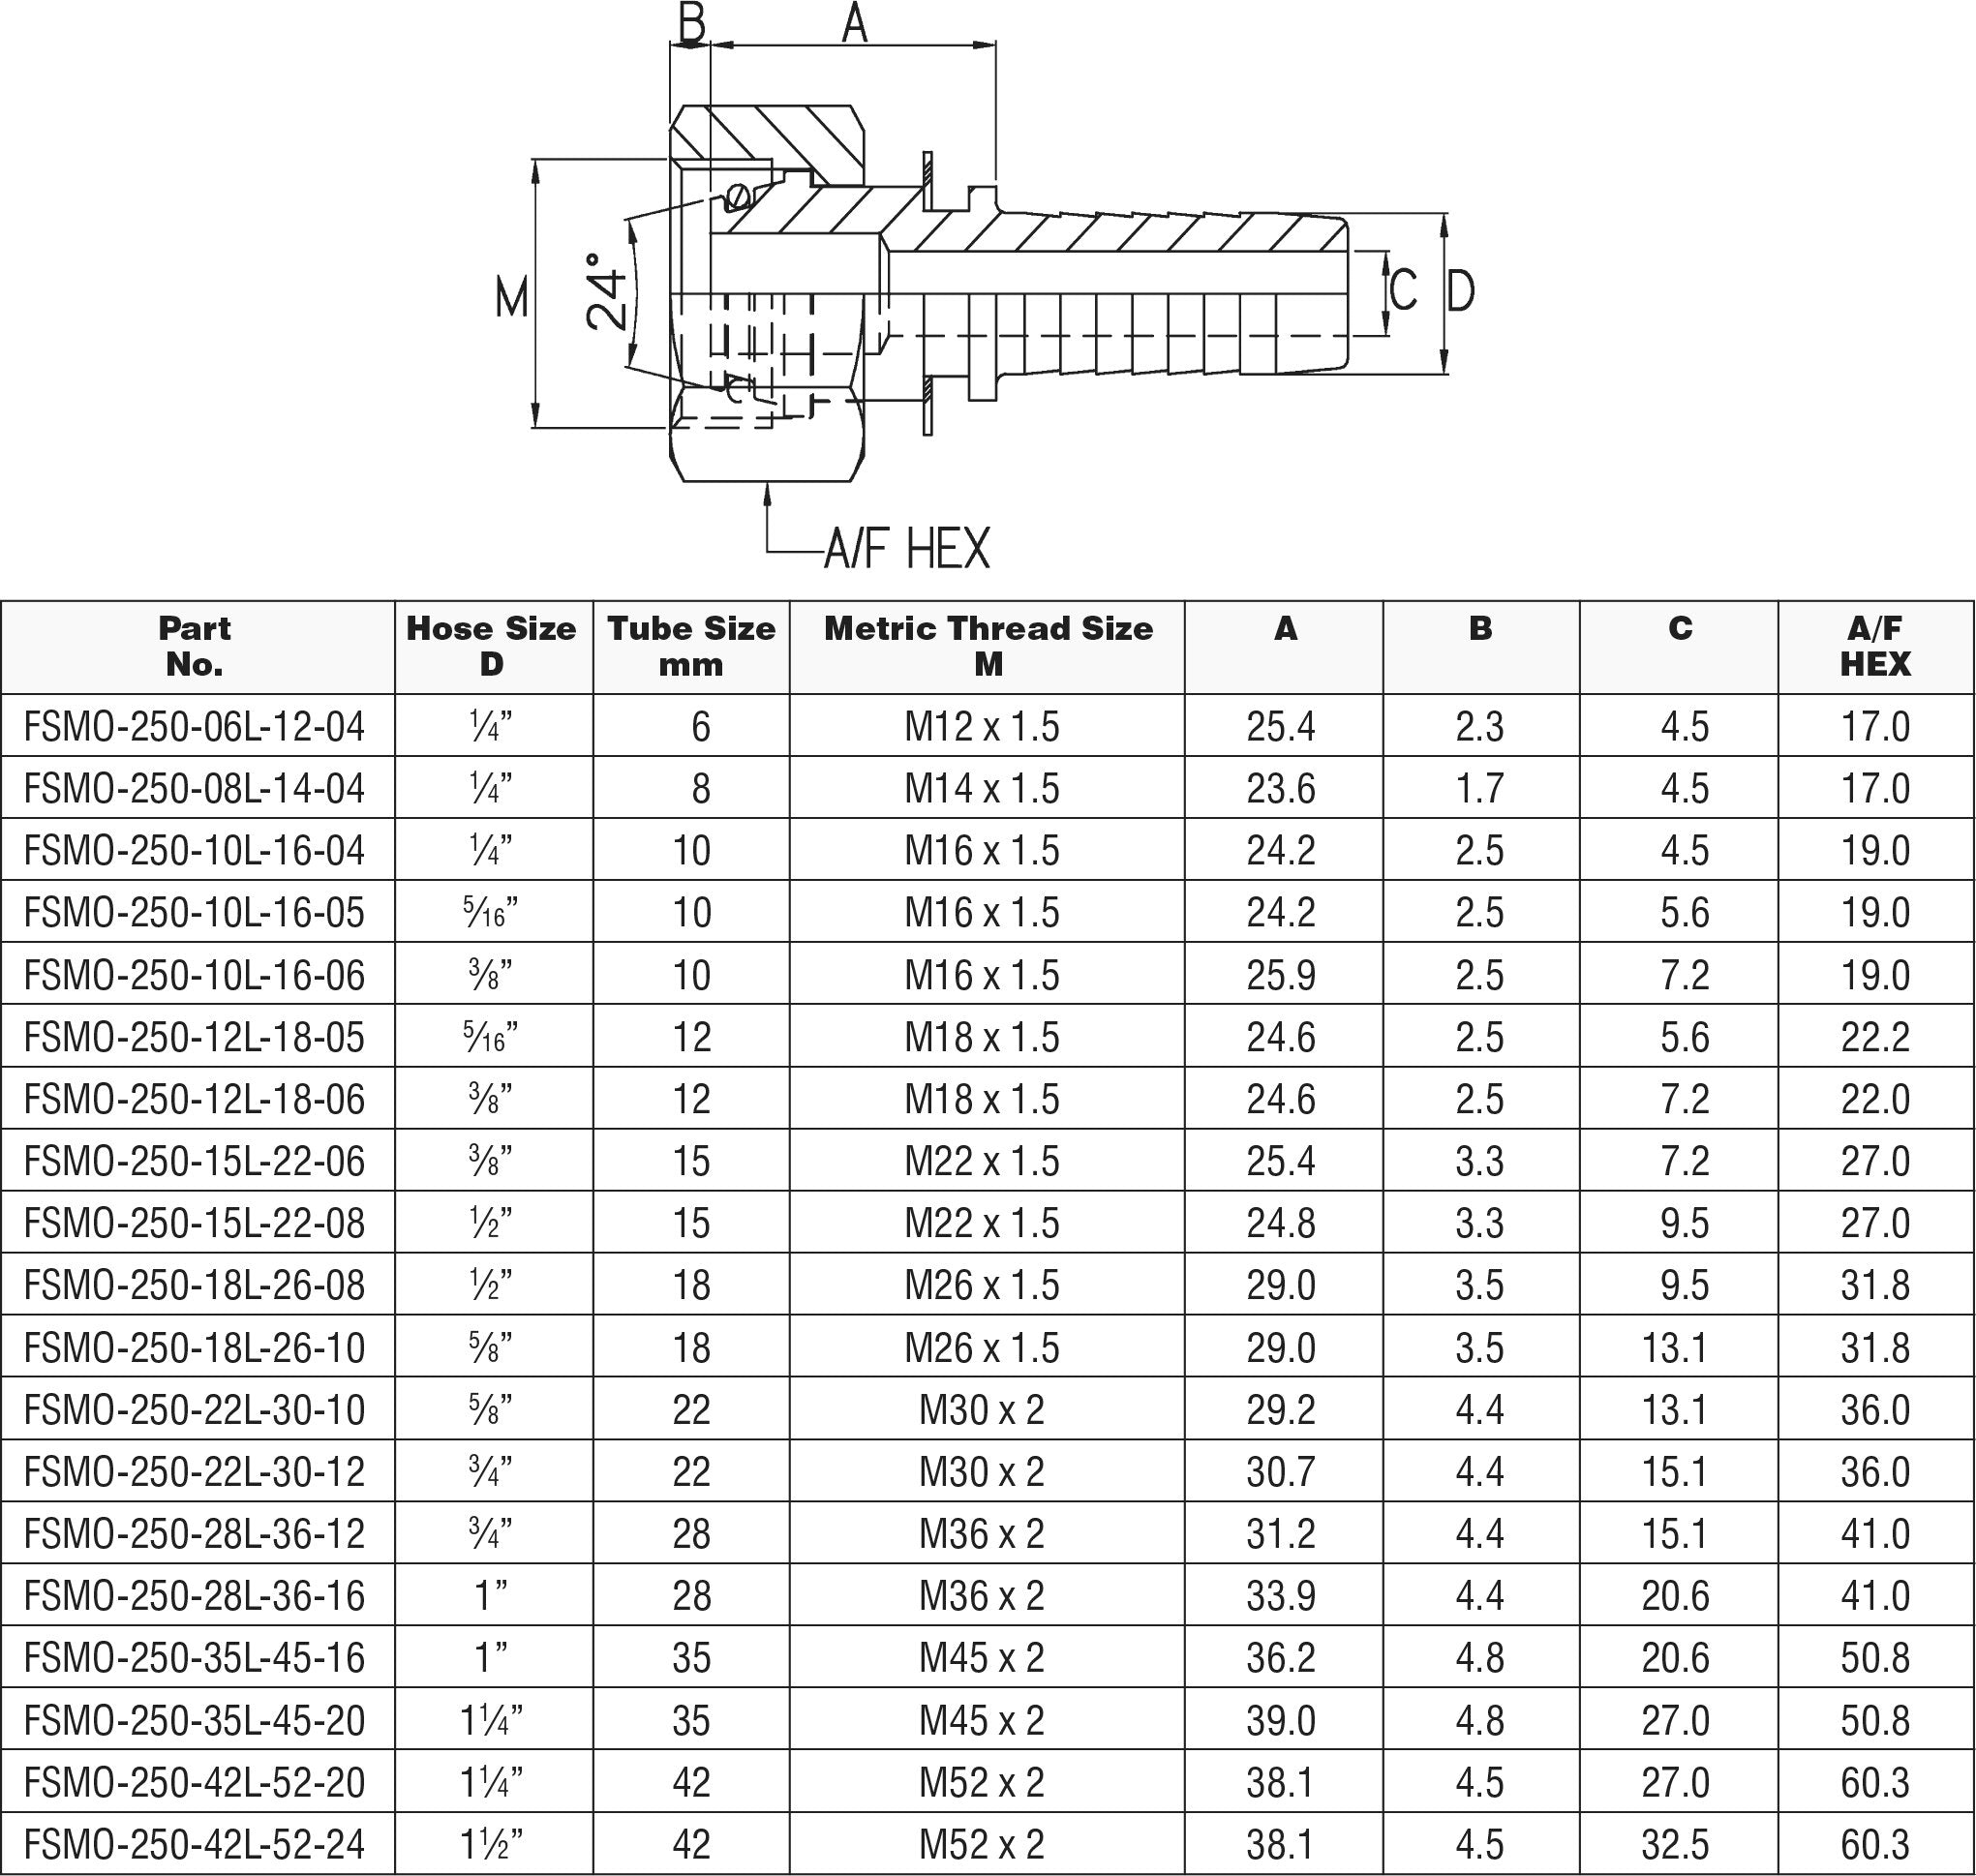 M26x1.5 (18L) O-RING SWIVEL FEMALE x 5/8" HYDRAULIC HOSETAIL-FSMO-250-18L-26-10 - Custom Fittings